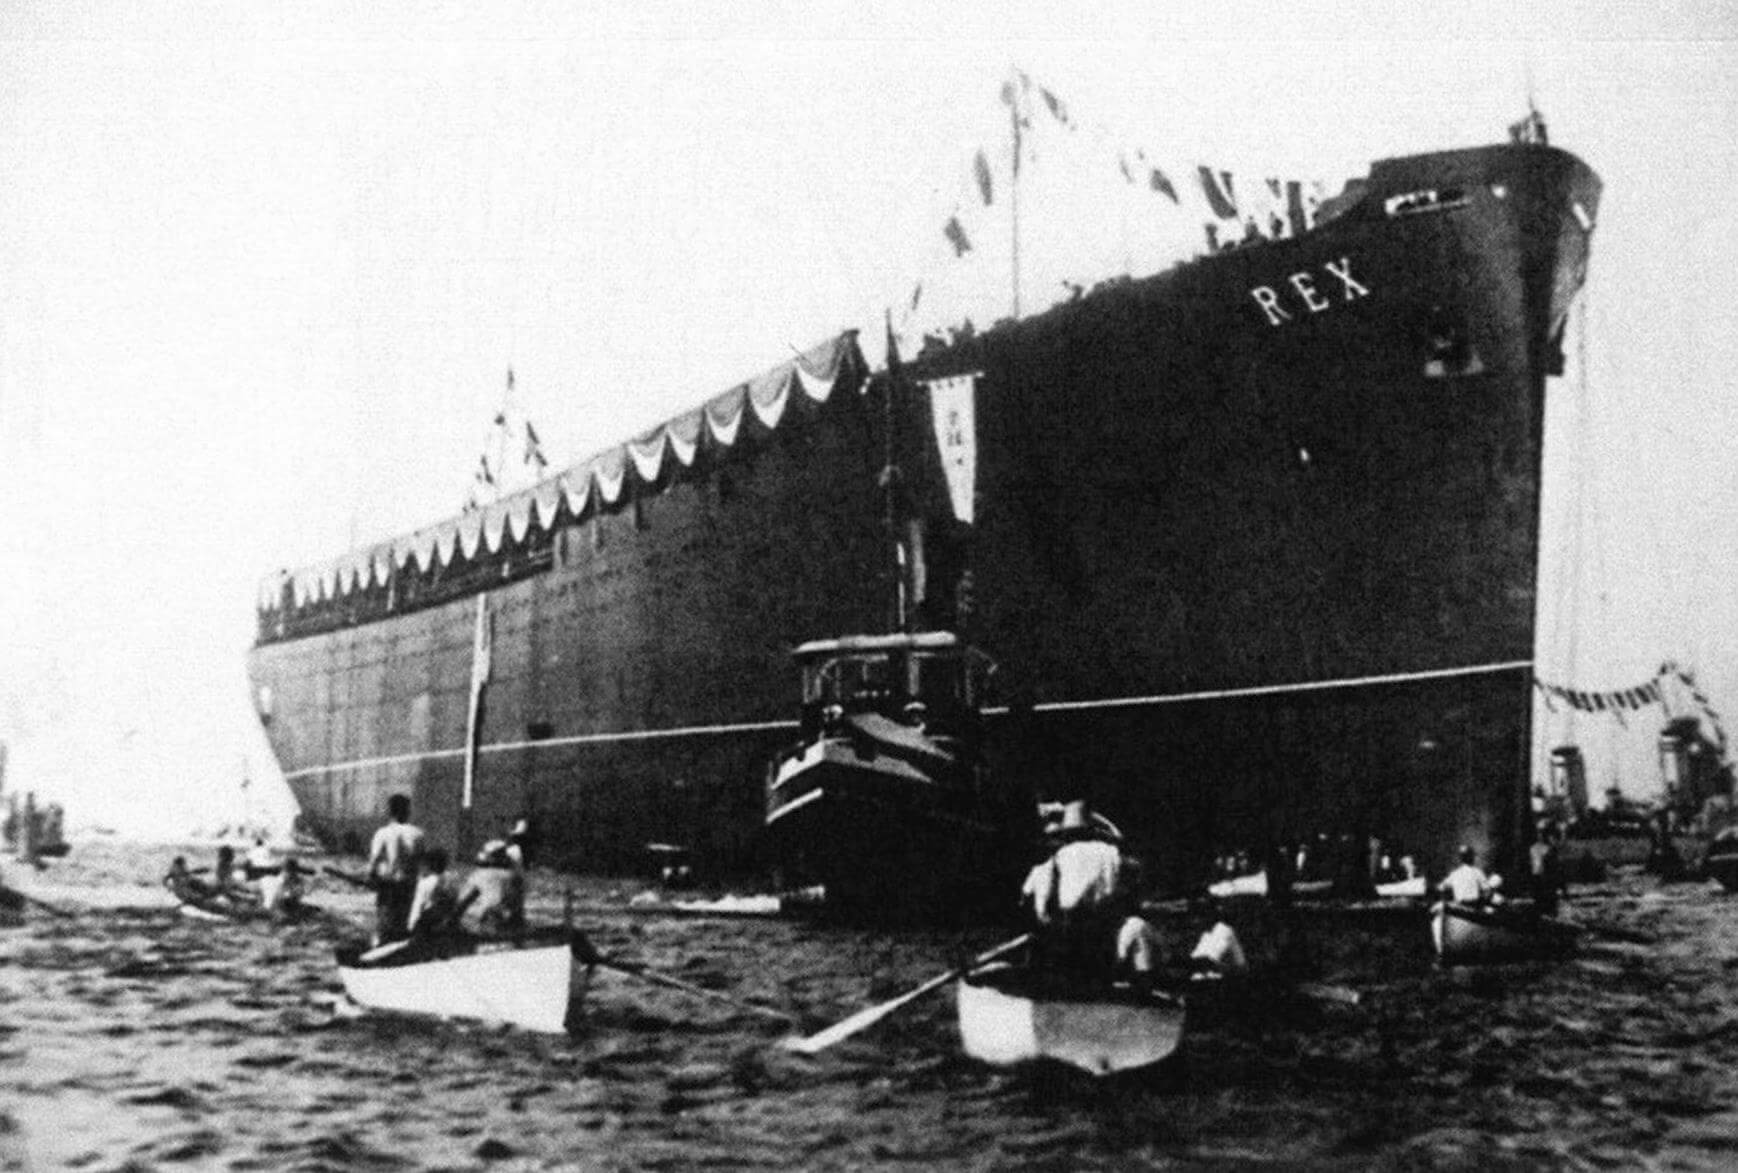 За могучим корпусом судна видны корабли «почетного караула» (фото 1 августа 1931 года)